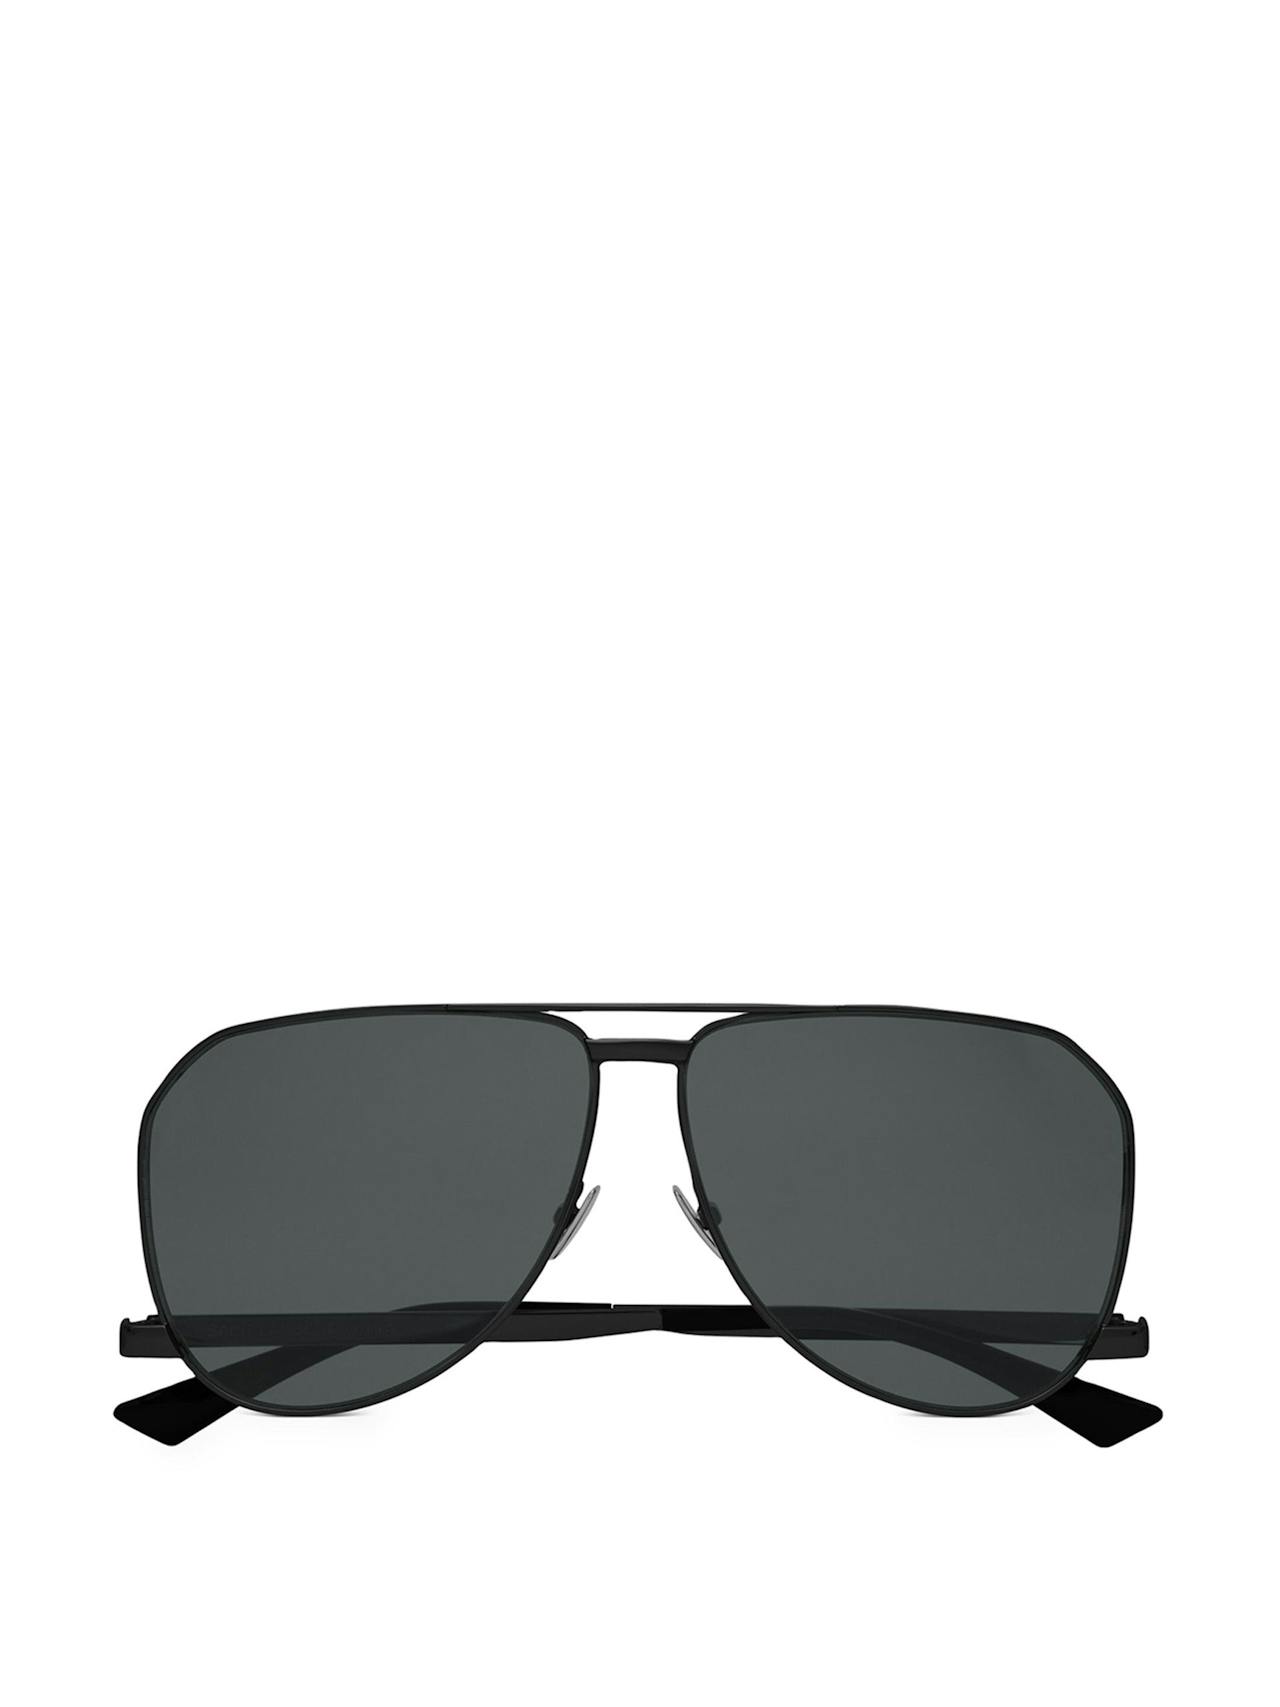 Dust aviator sunglasses